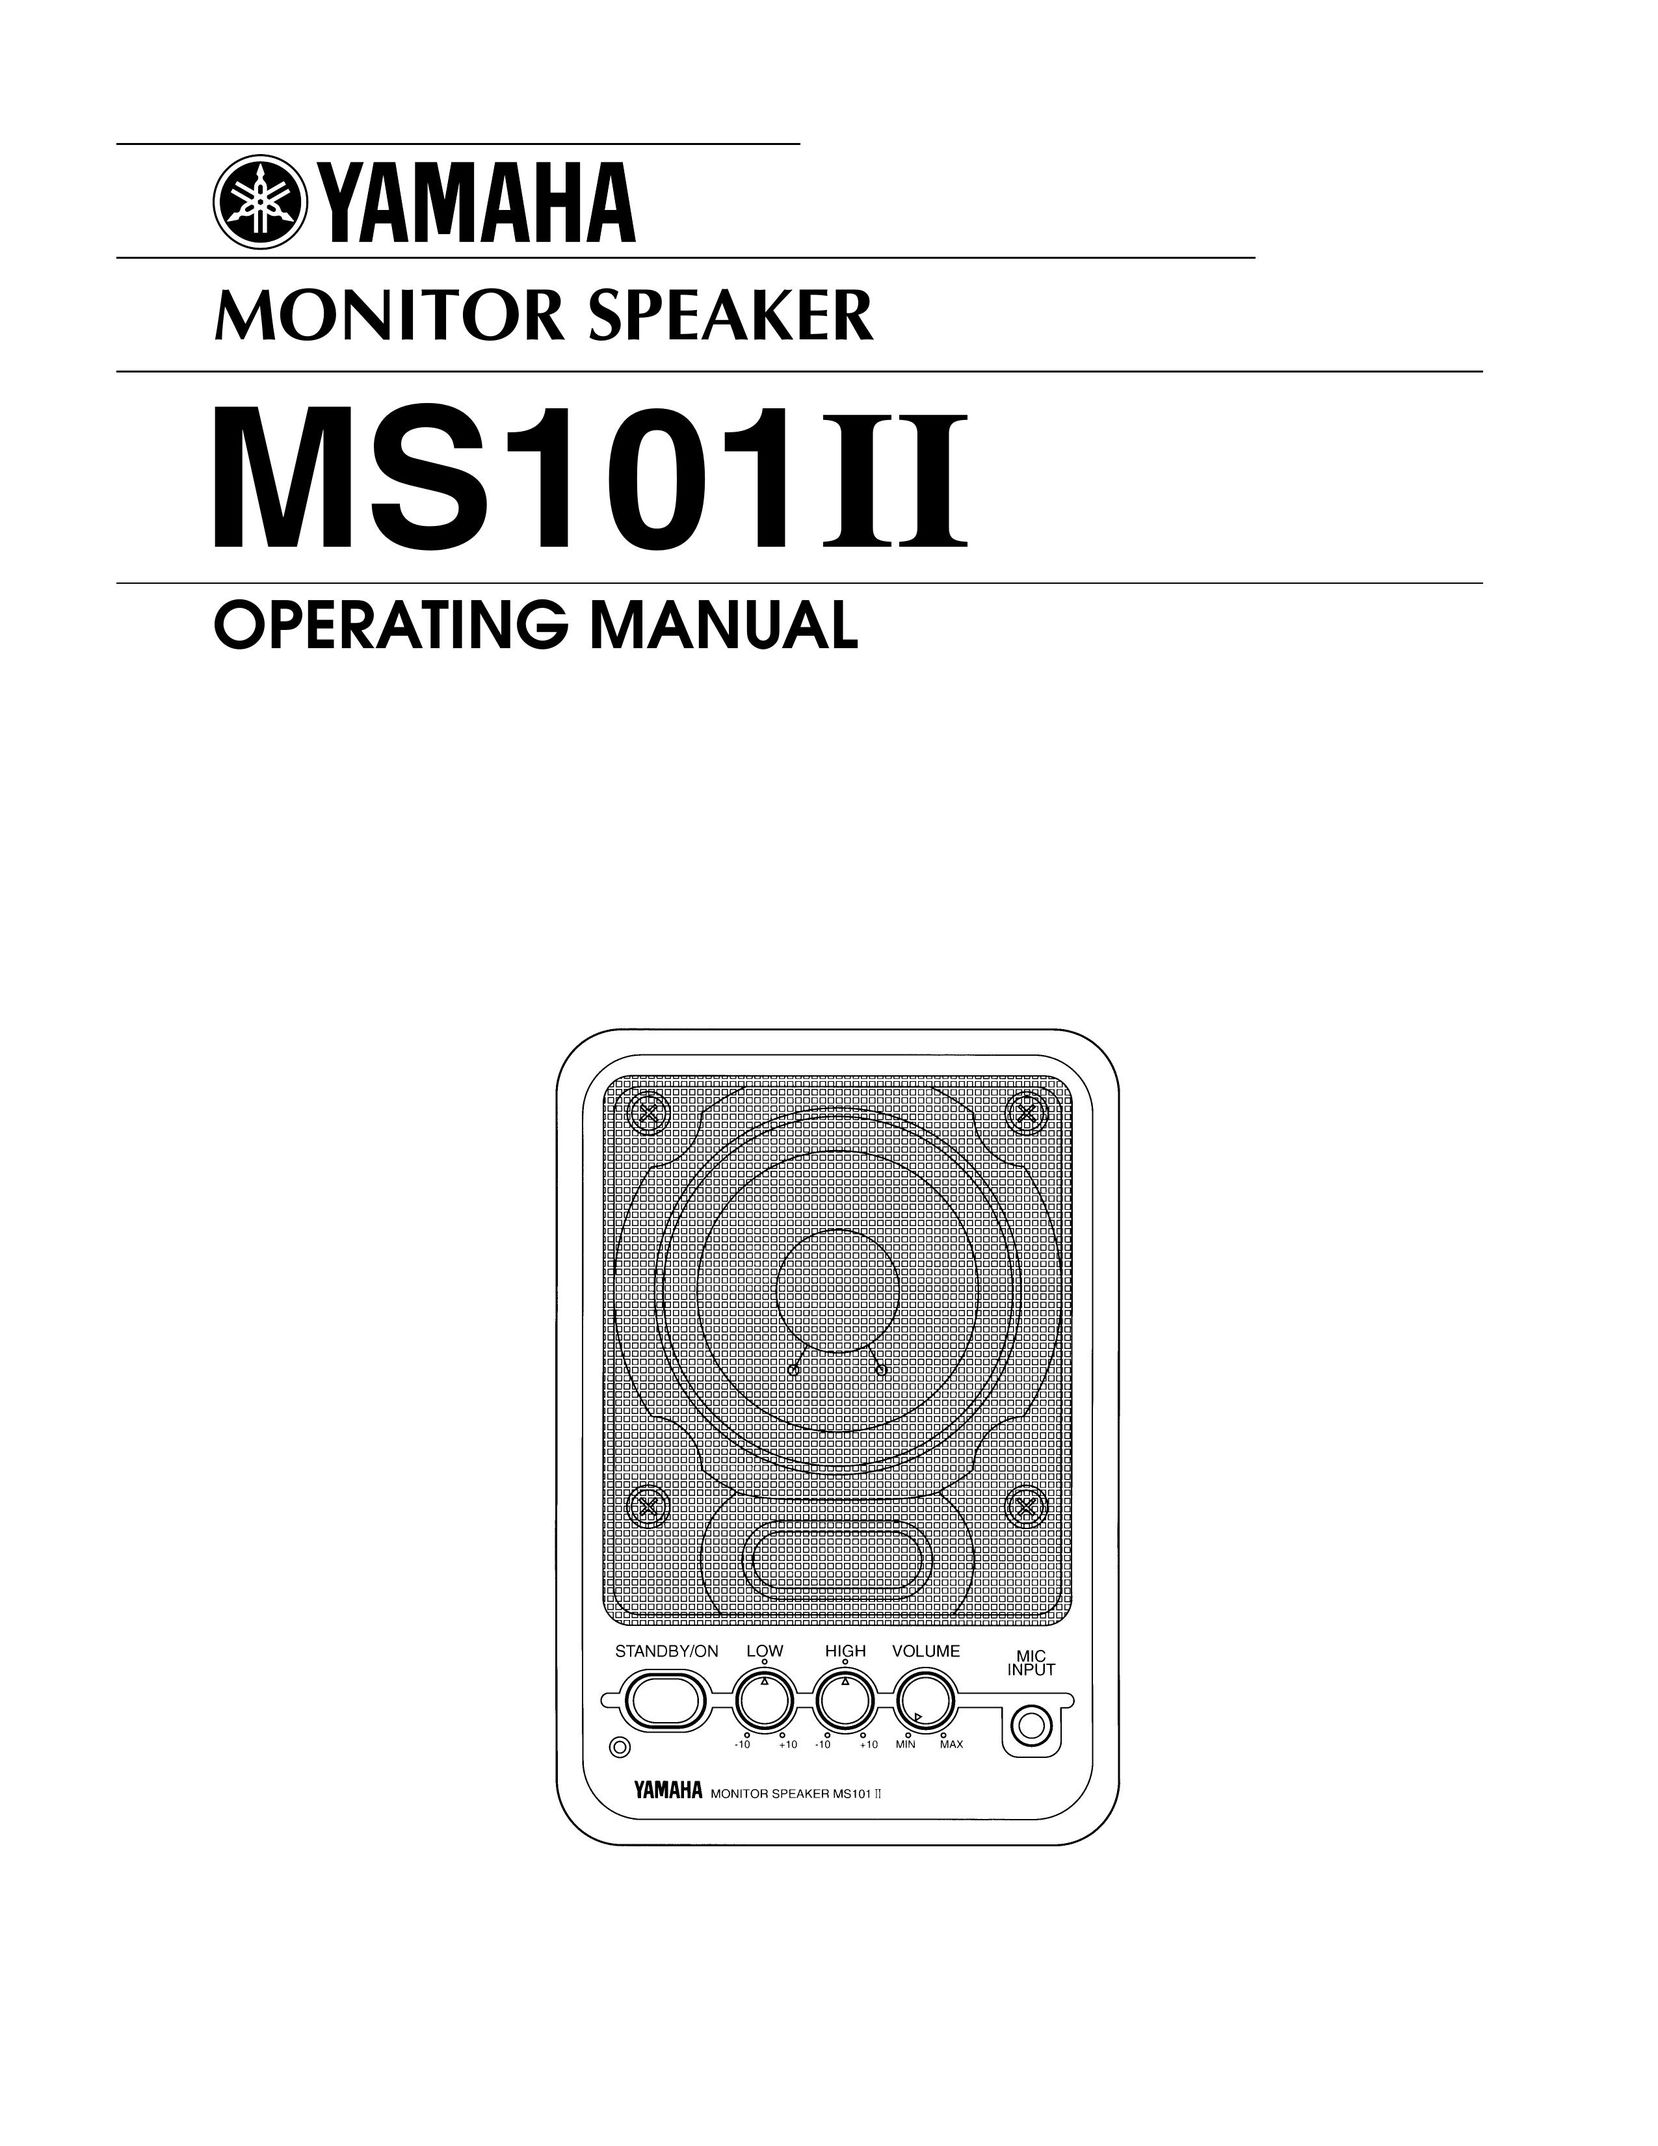 Yamaha MS101II Speaker User Manual